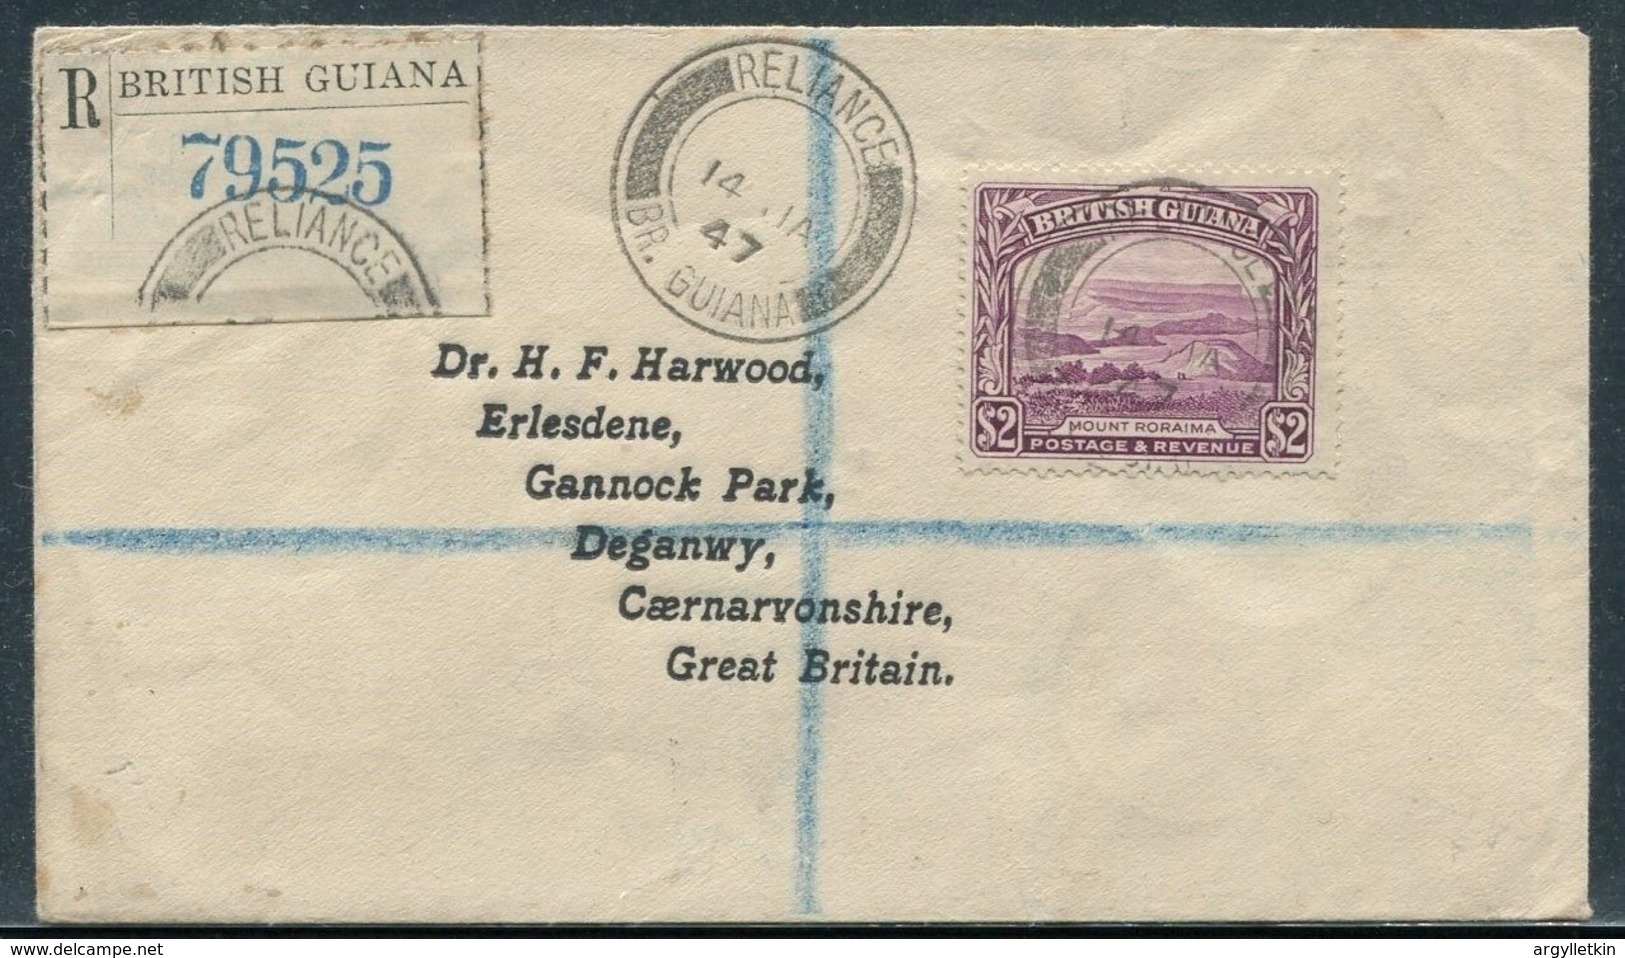 BRITISH GUIANA MOUNT RORAIMA $2 GEORGE VI RELIANCE RARE AIR MAIL POSTMARKS - British Guiana (...-1966)